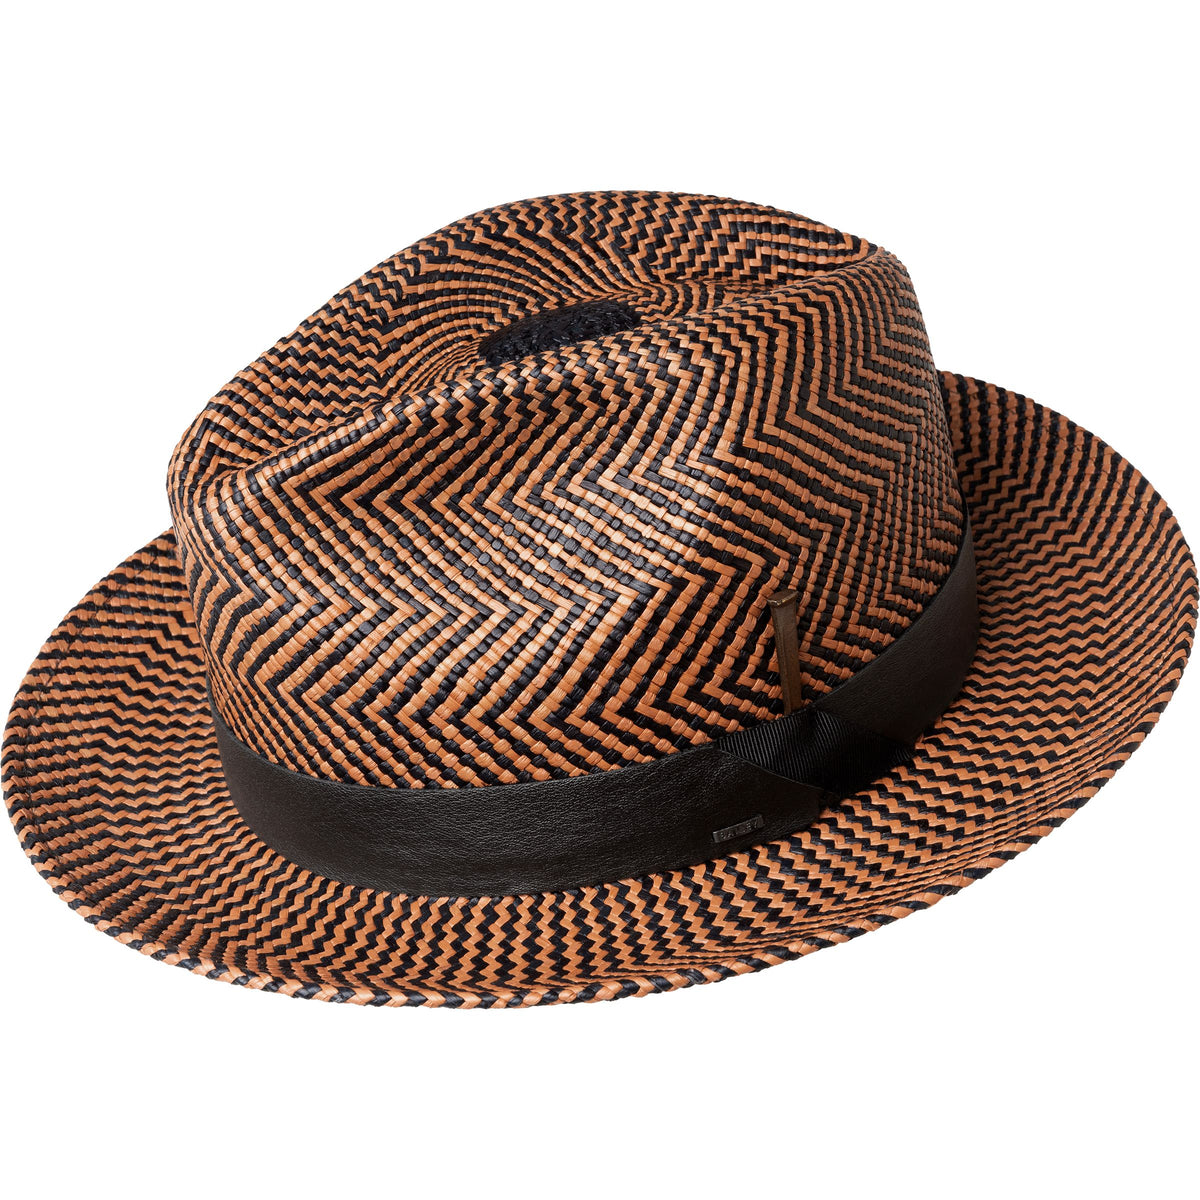 Bailey Rene Toquilla Straw Panama Hat – Fedoras.com